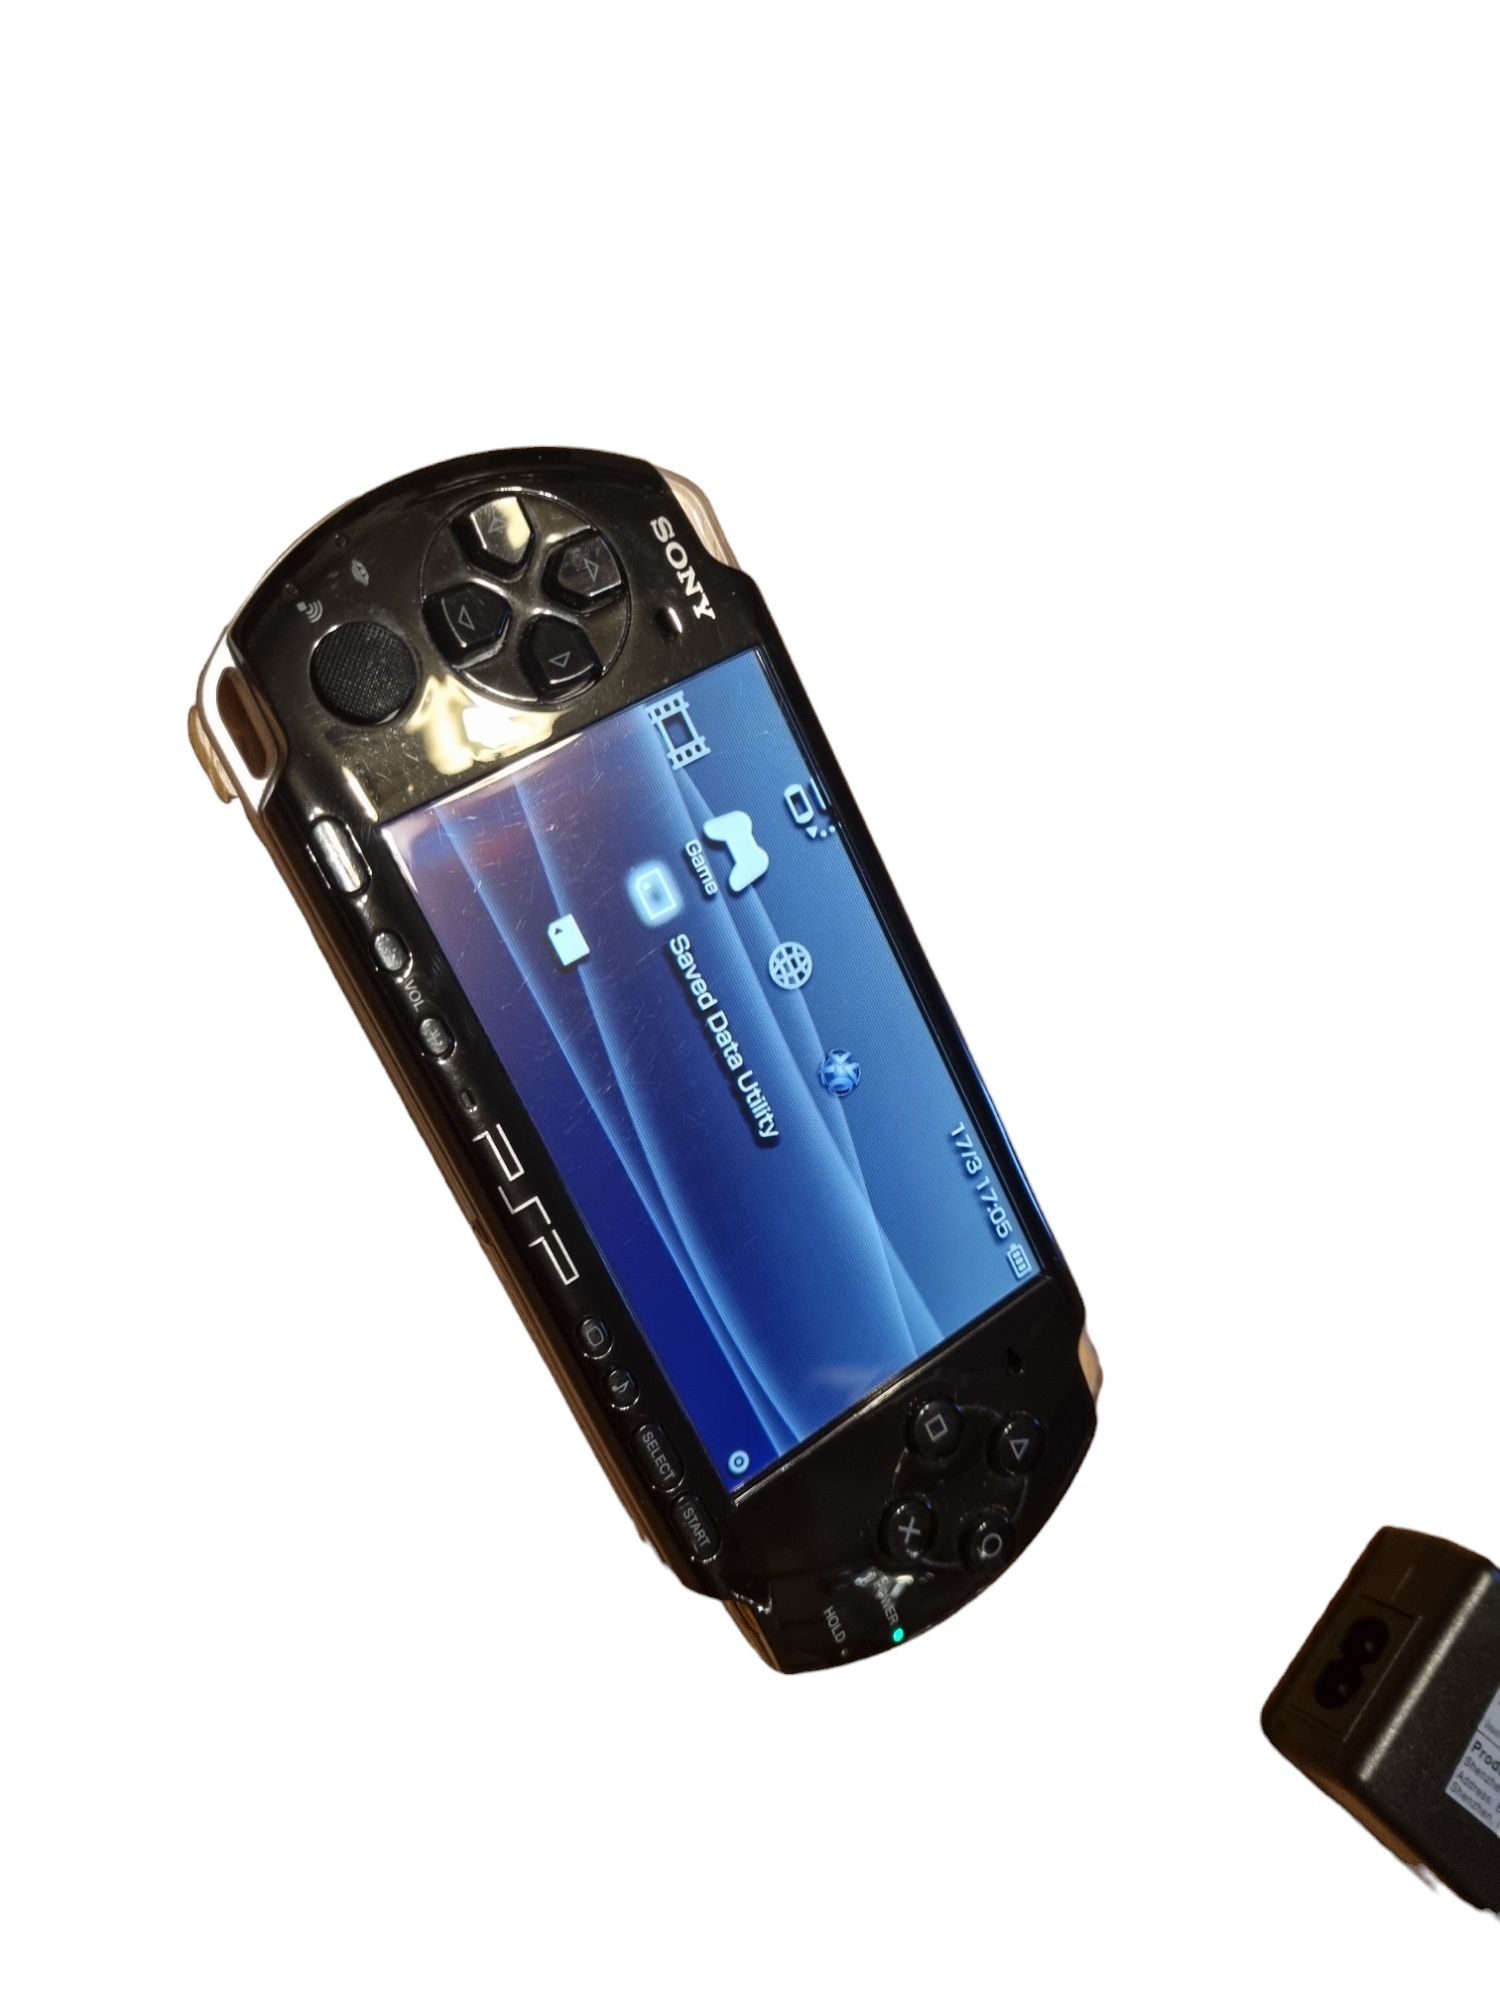 Sony PSP 3004 slim lite PlayStation portable